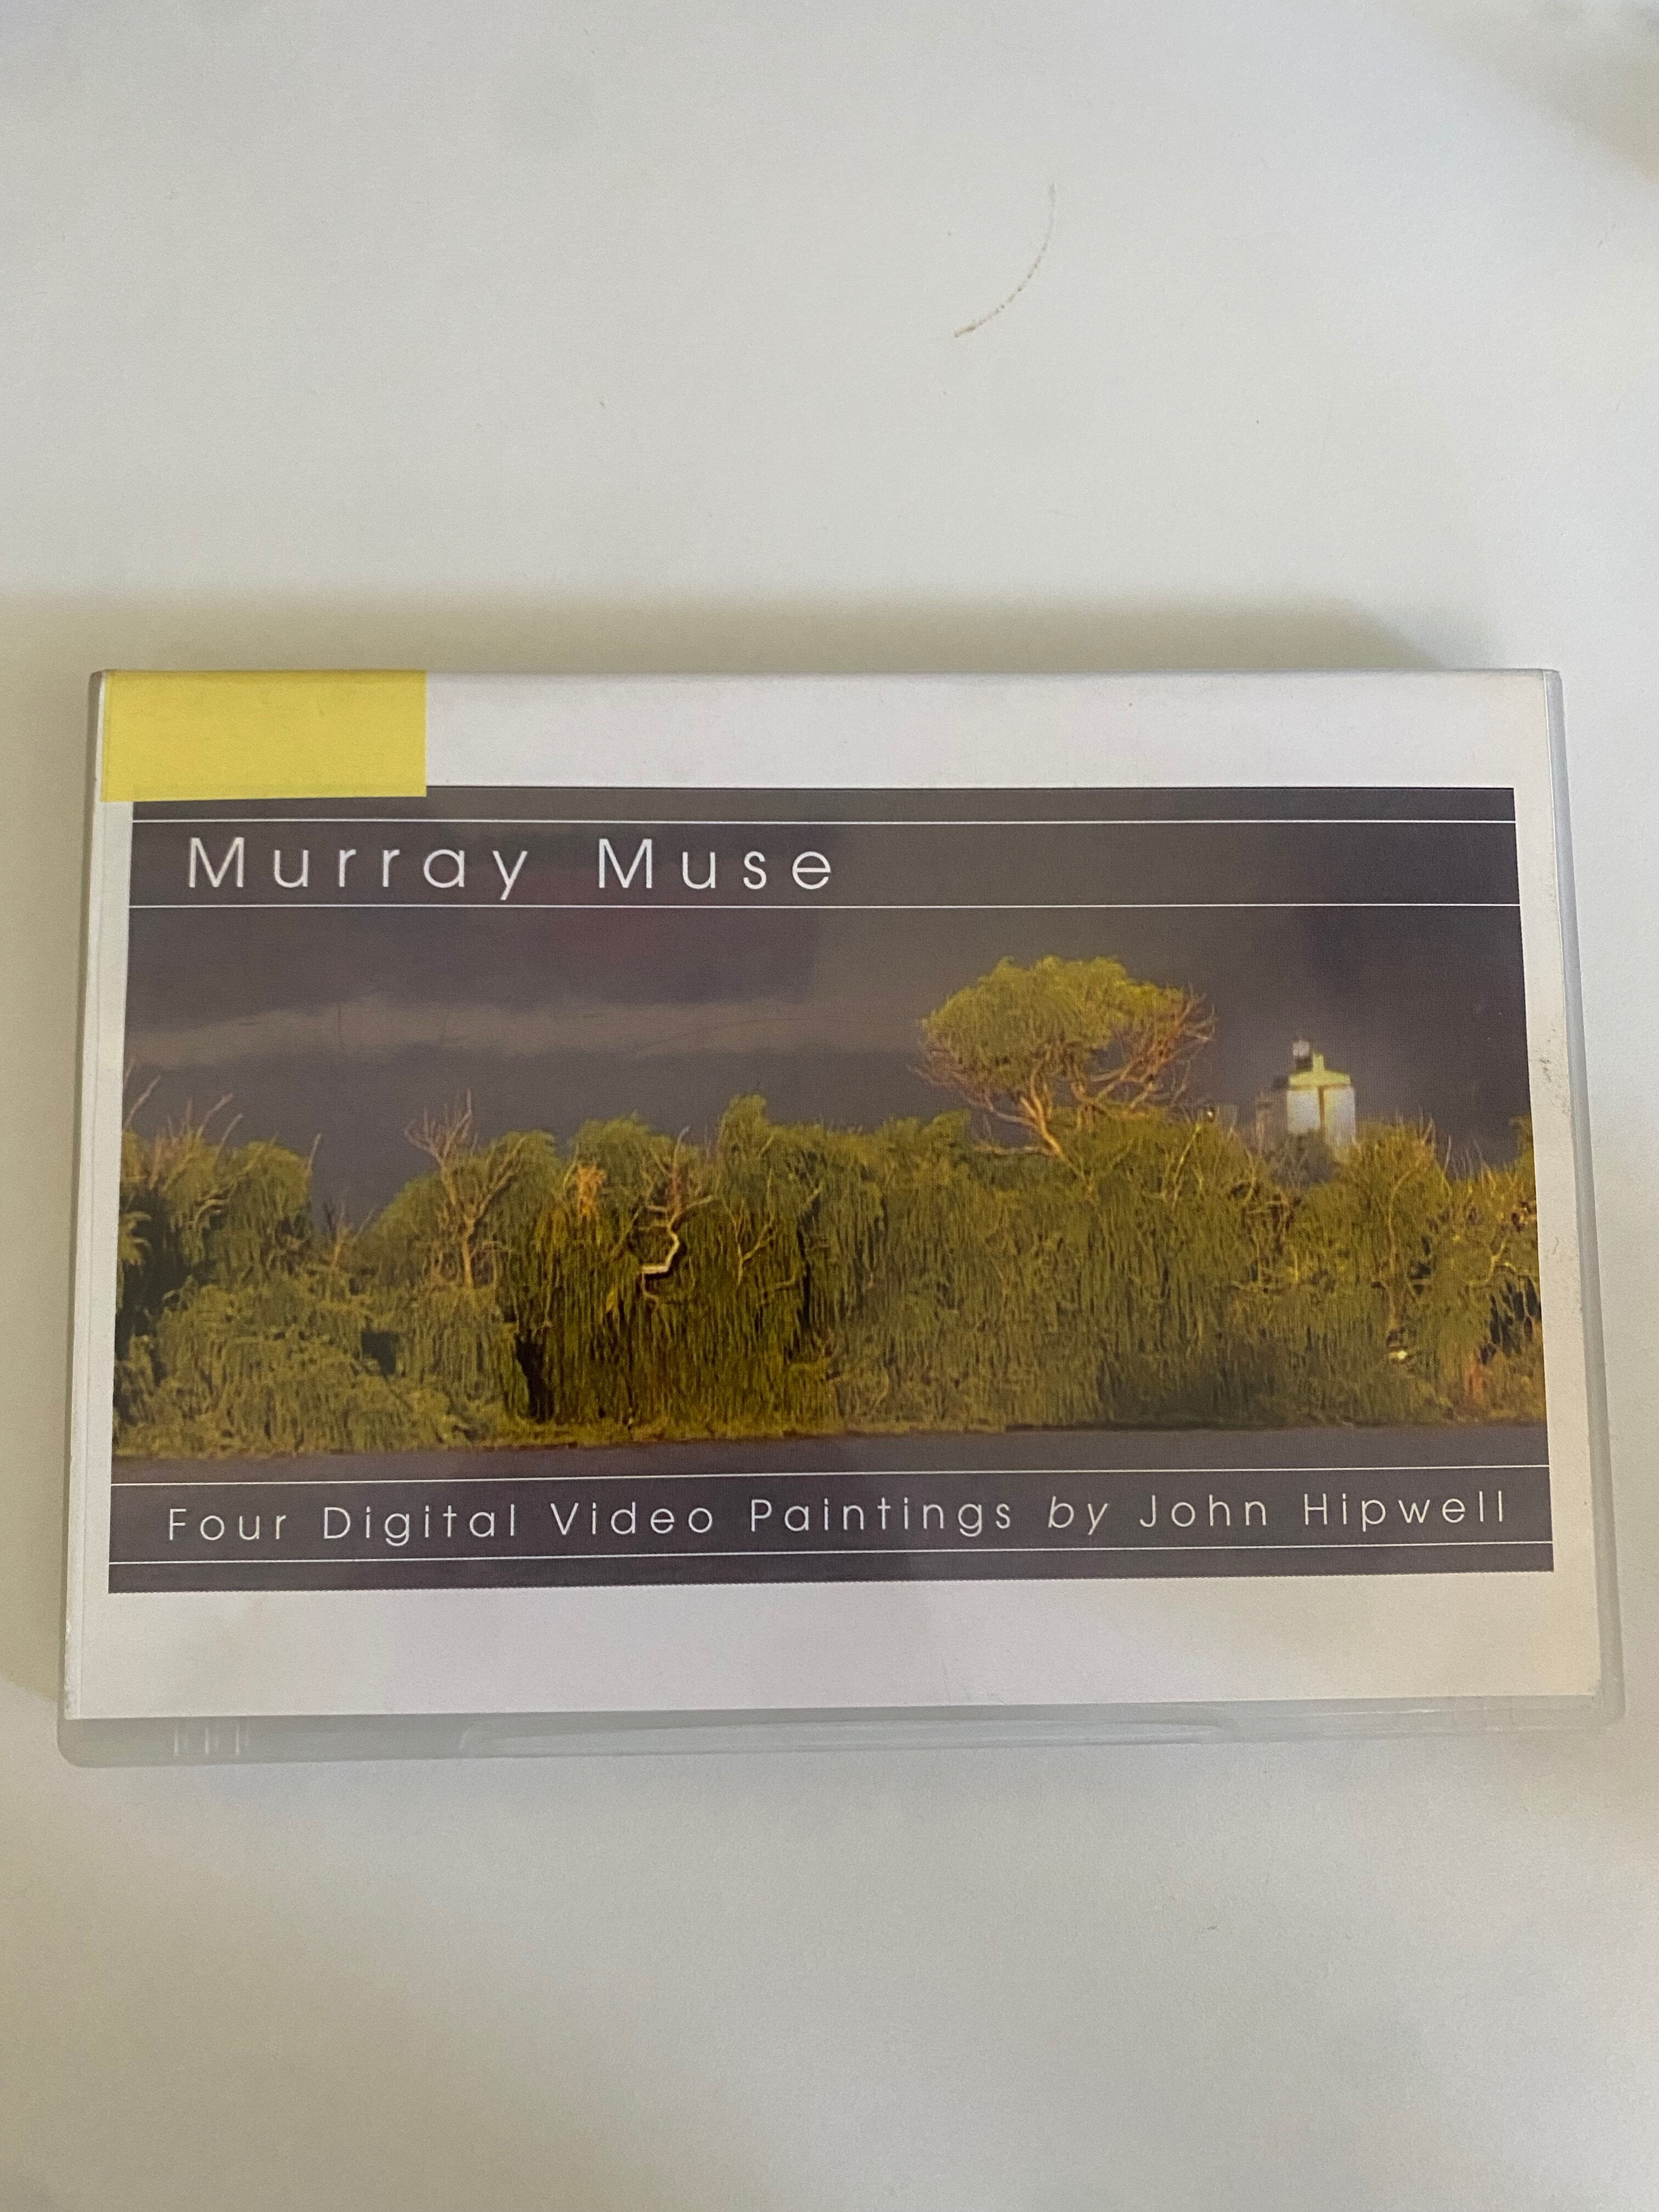 Murray Muse2